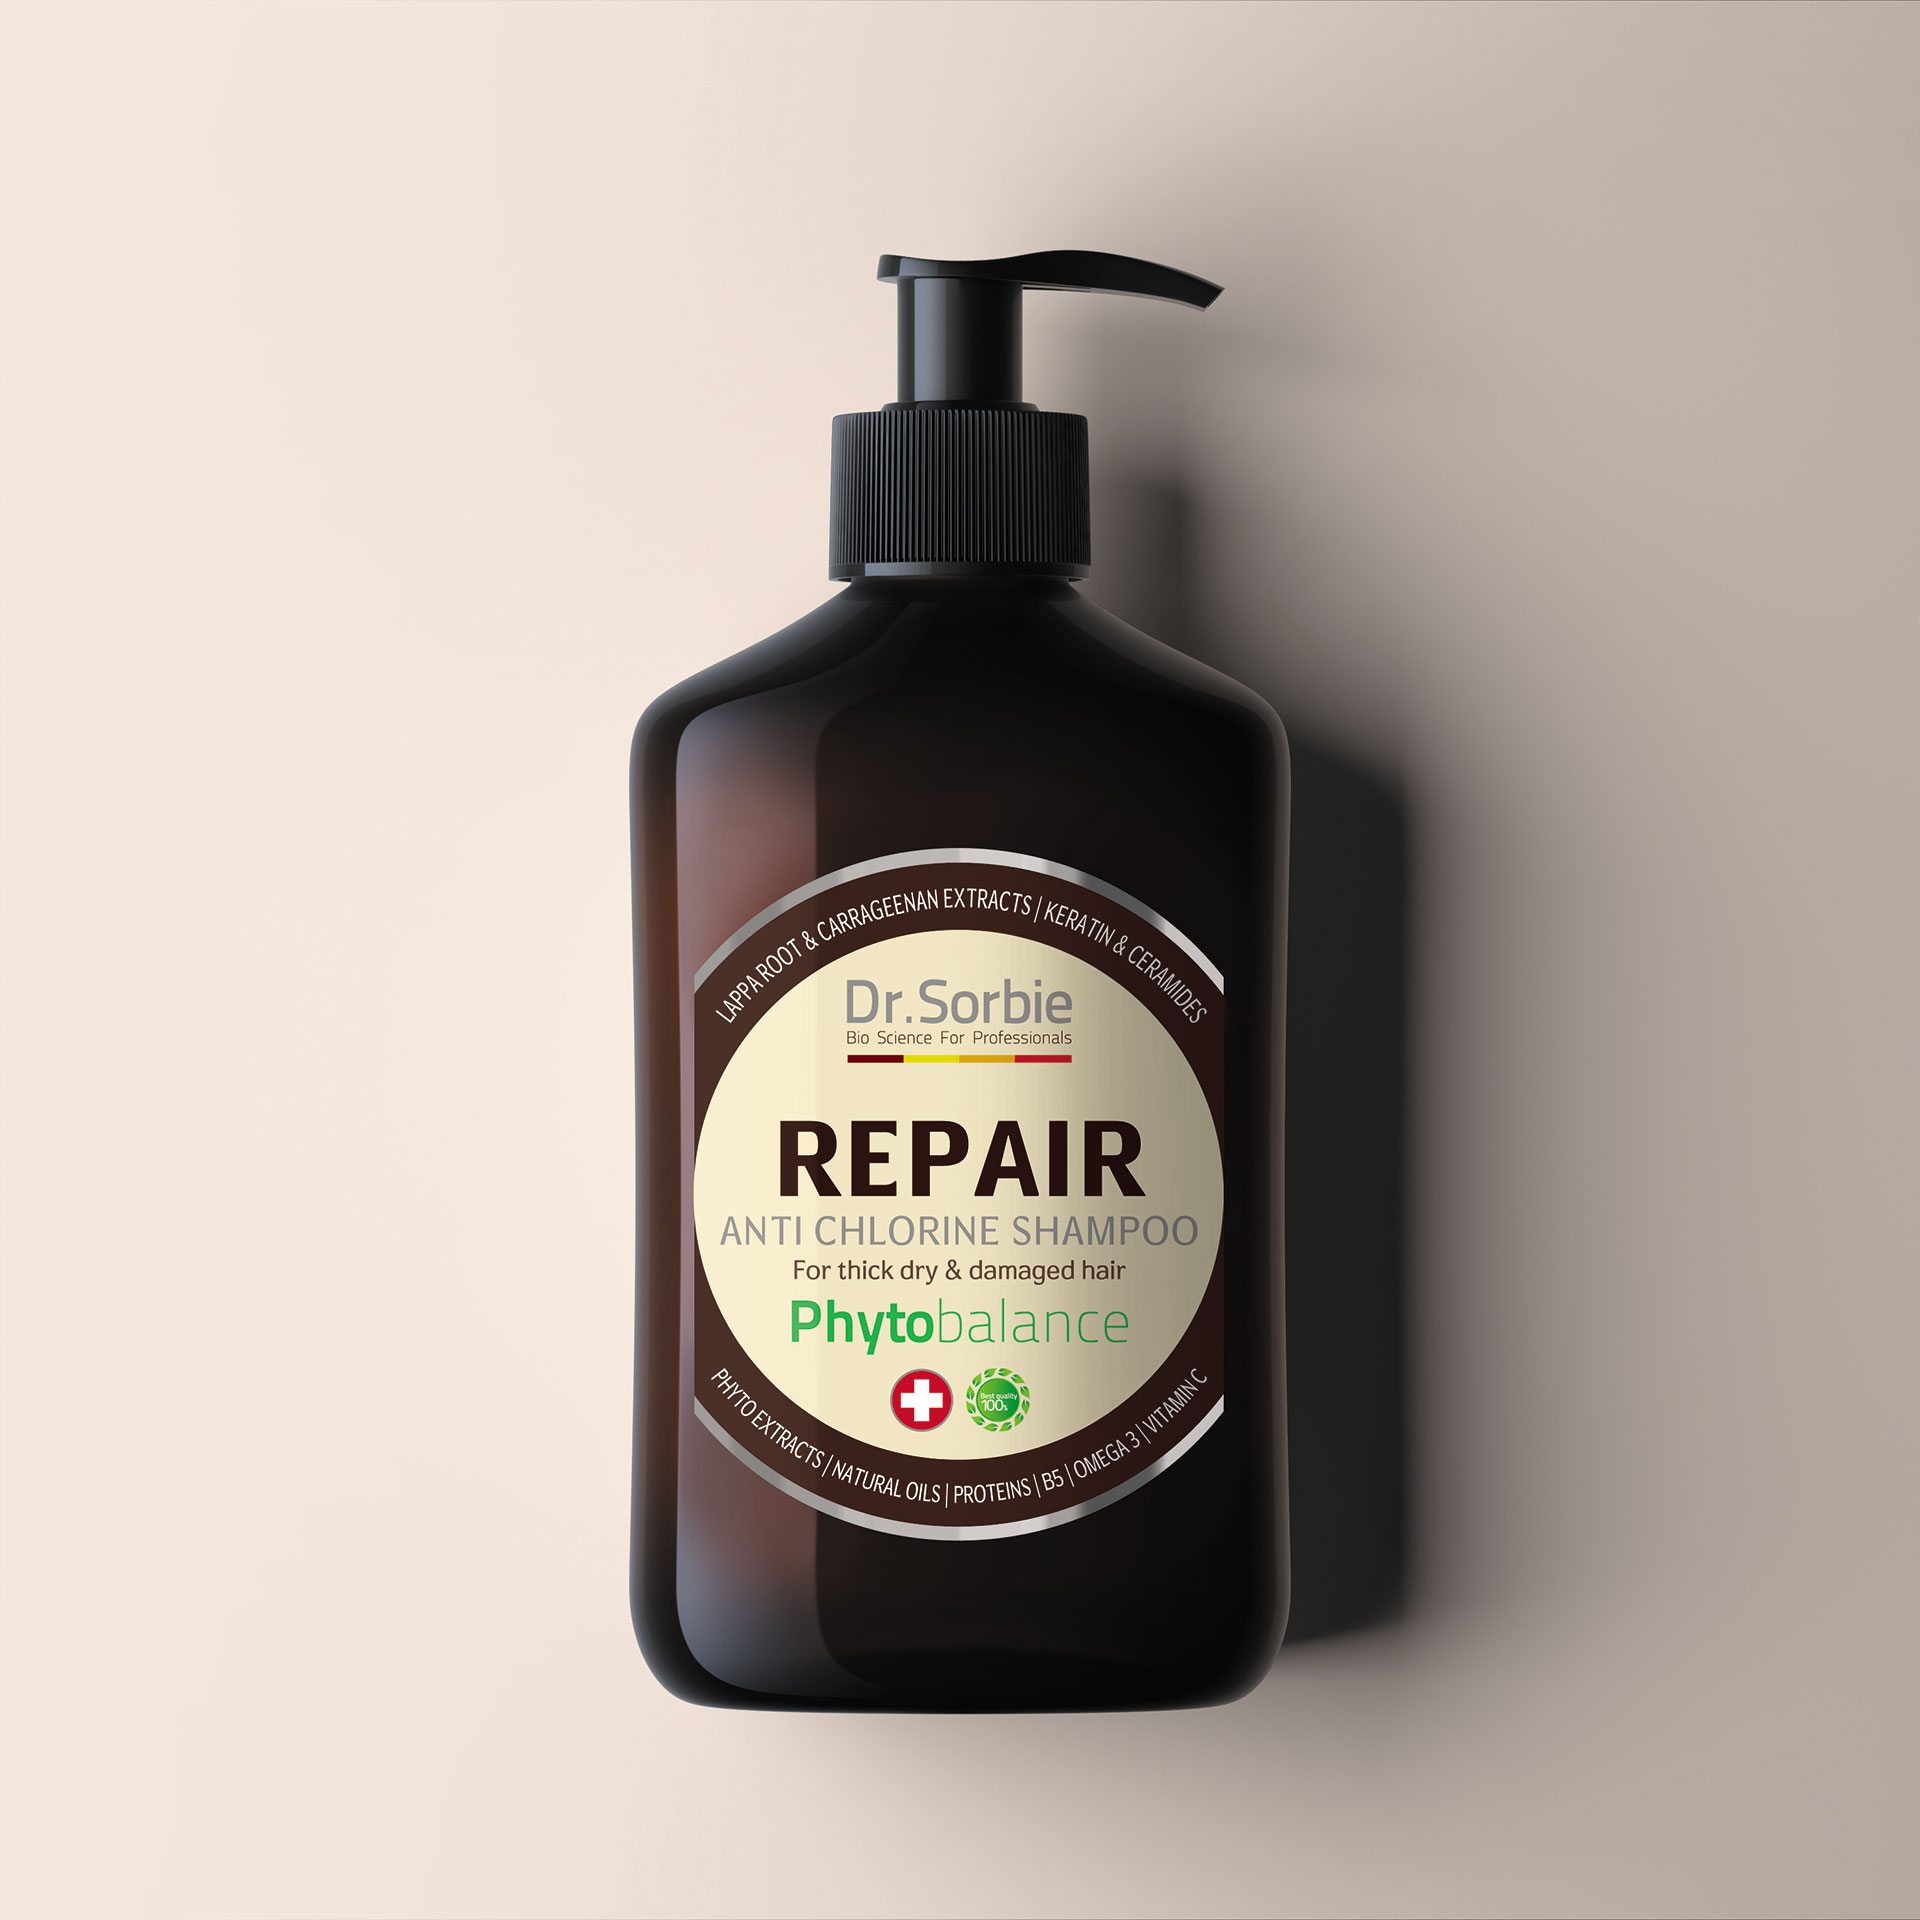 Repair Shampoo by Dr. sorbie